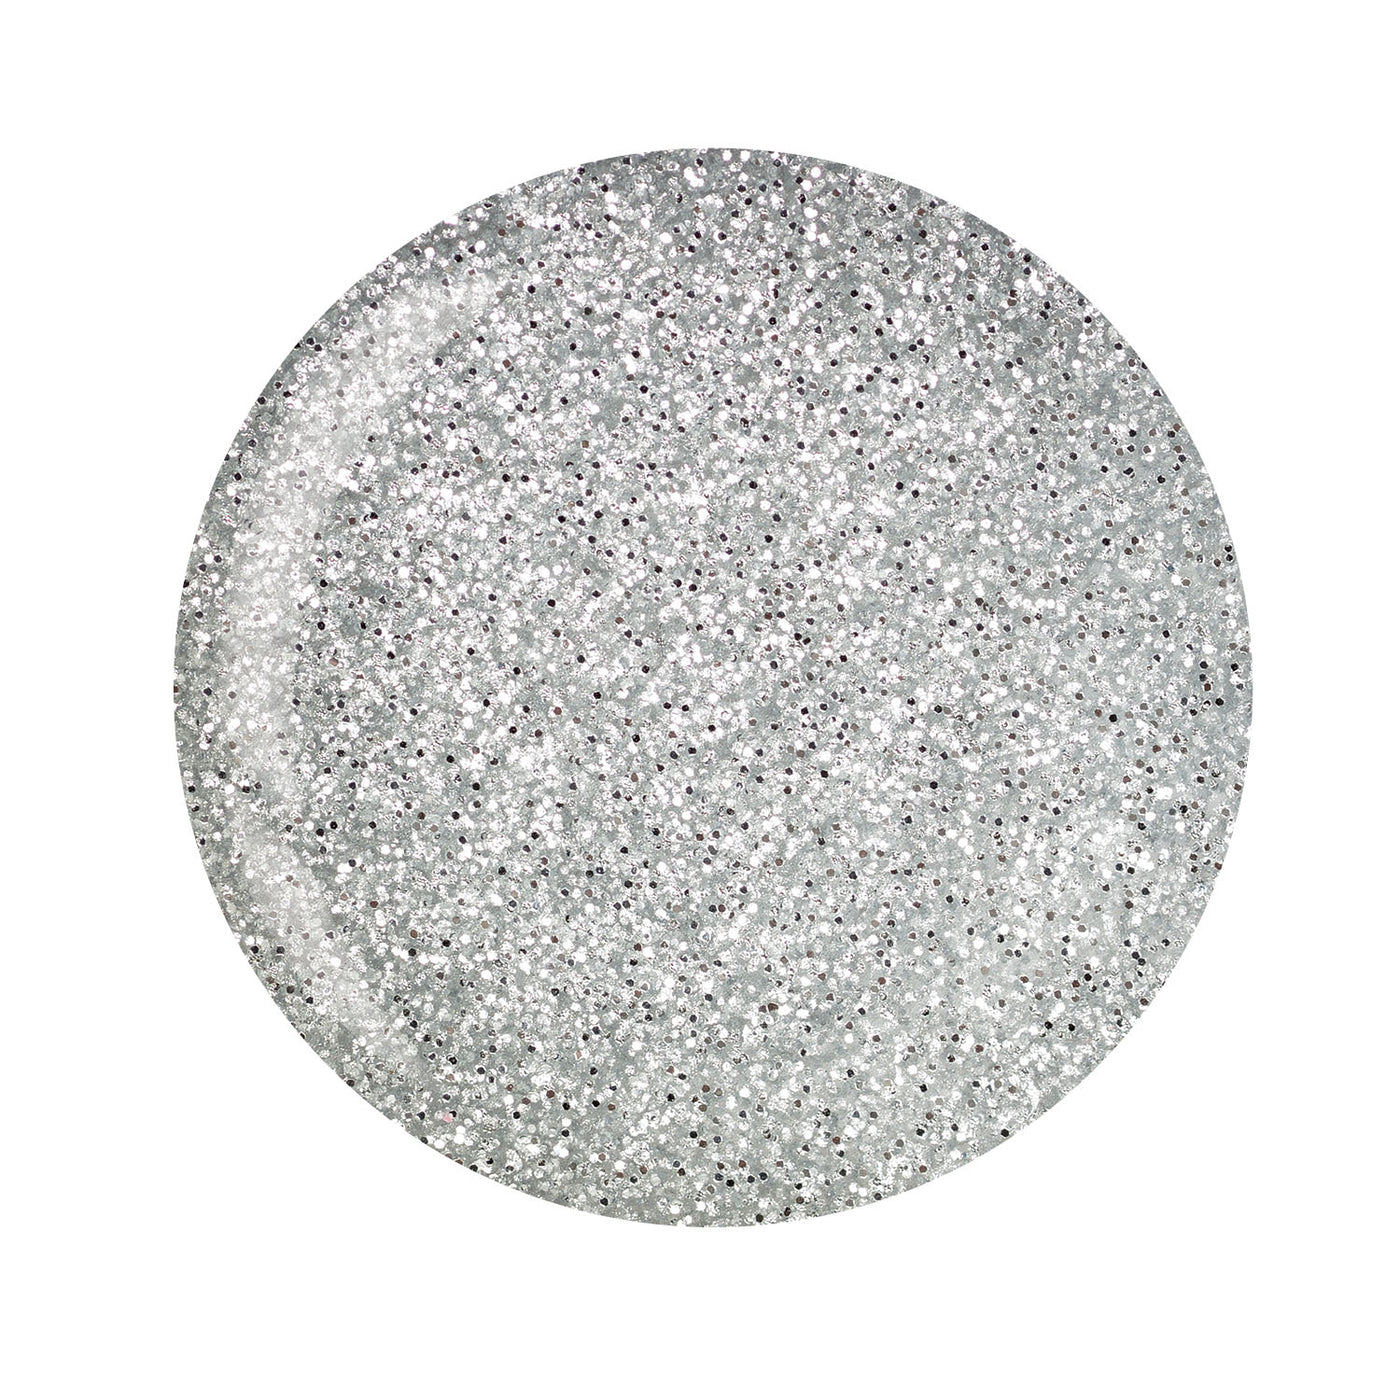 CP Dipping Powder14g - 5559-5 Silver Glitter